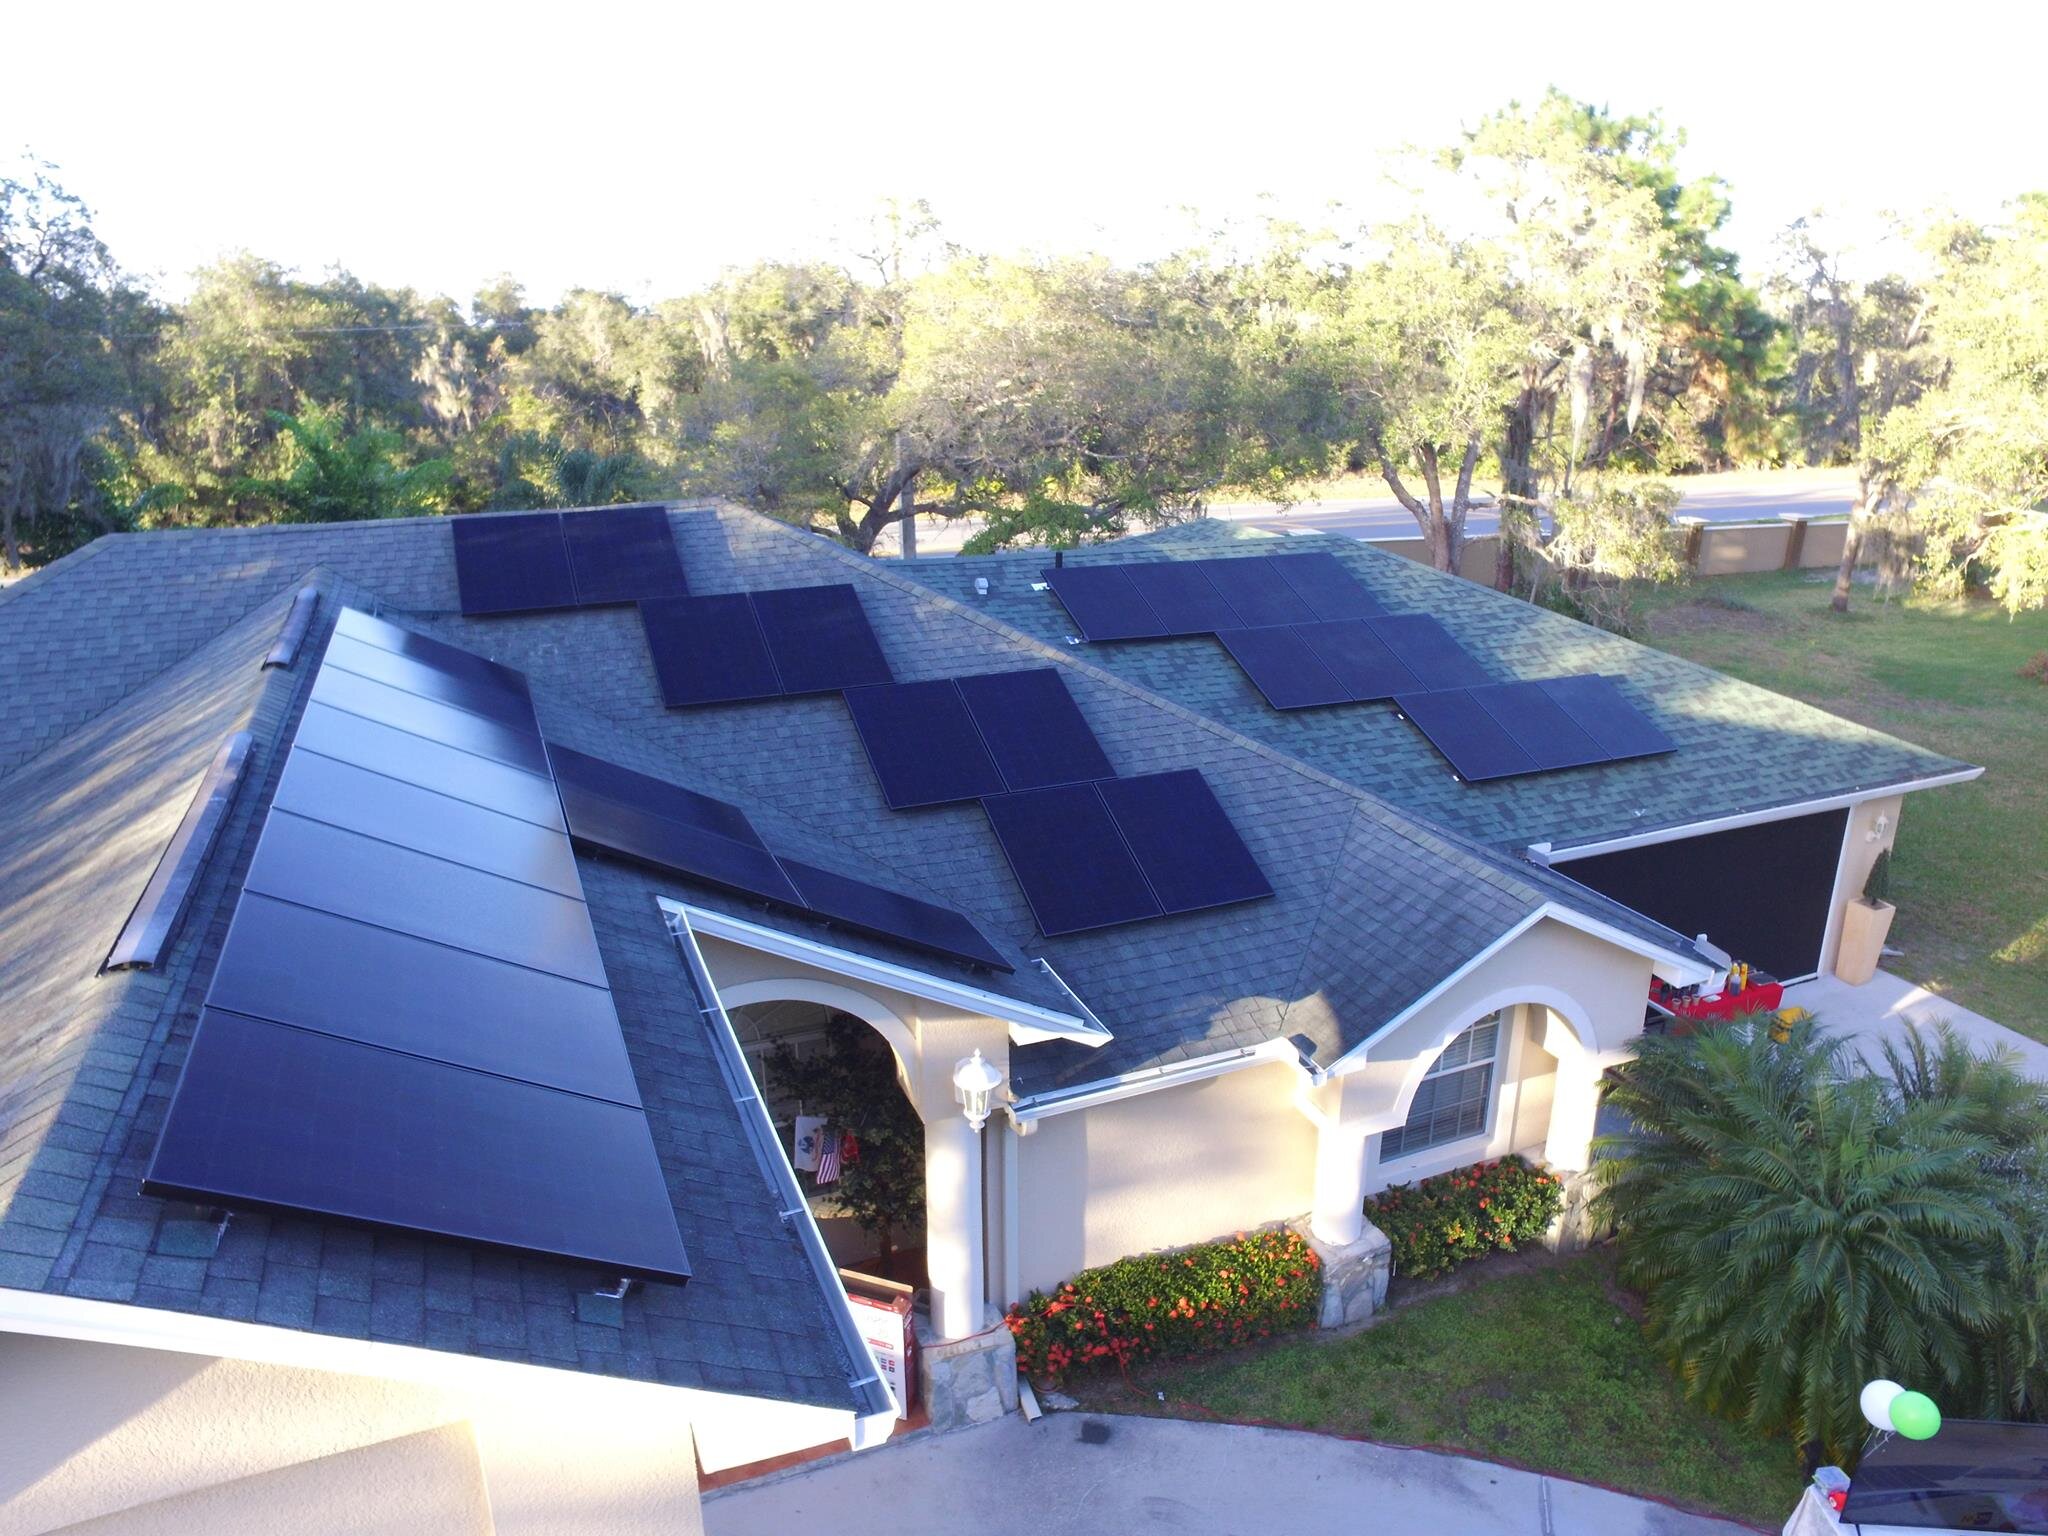 Solar Panels on Home 